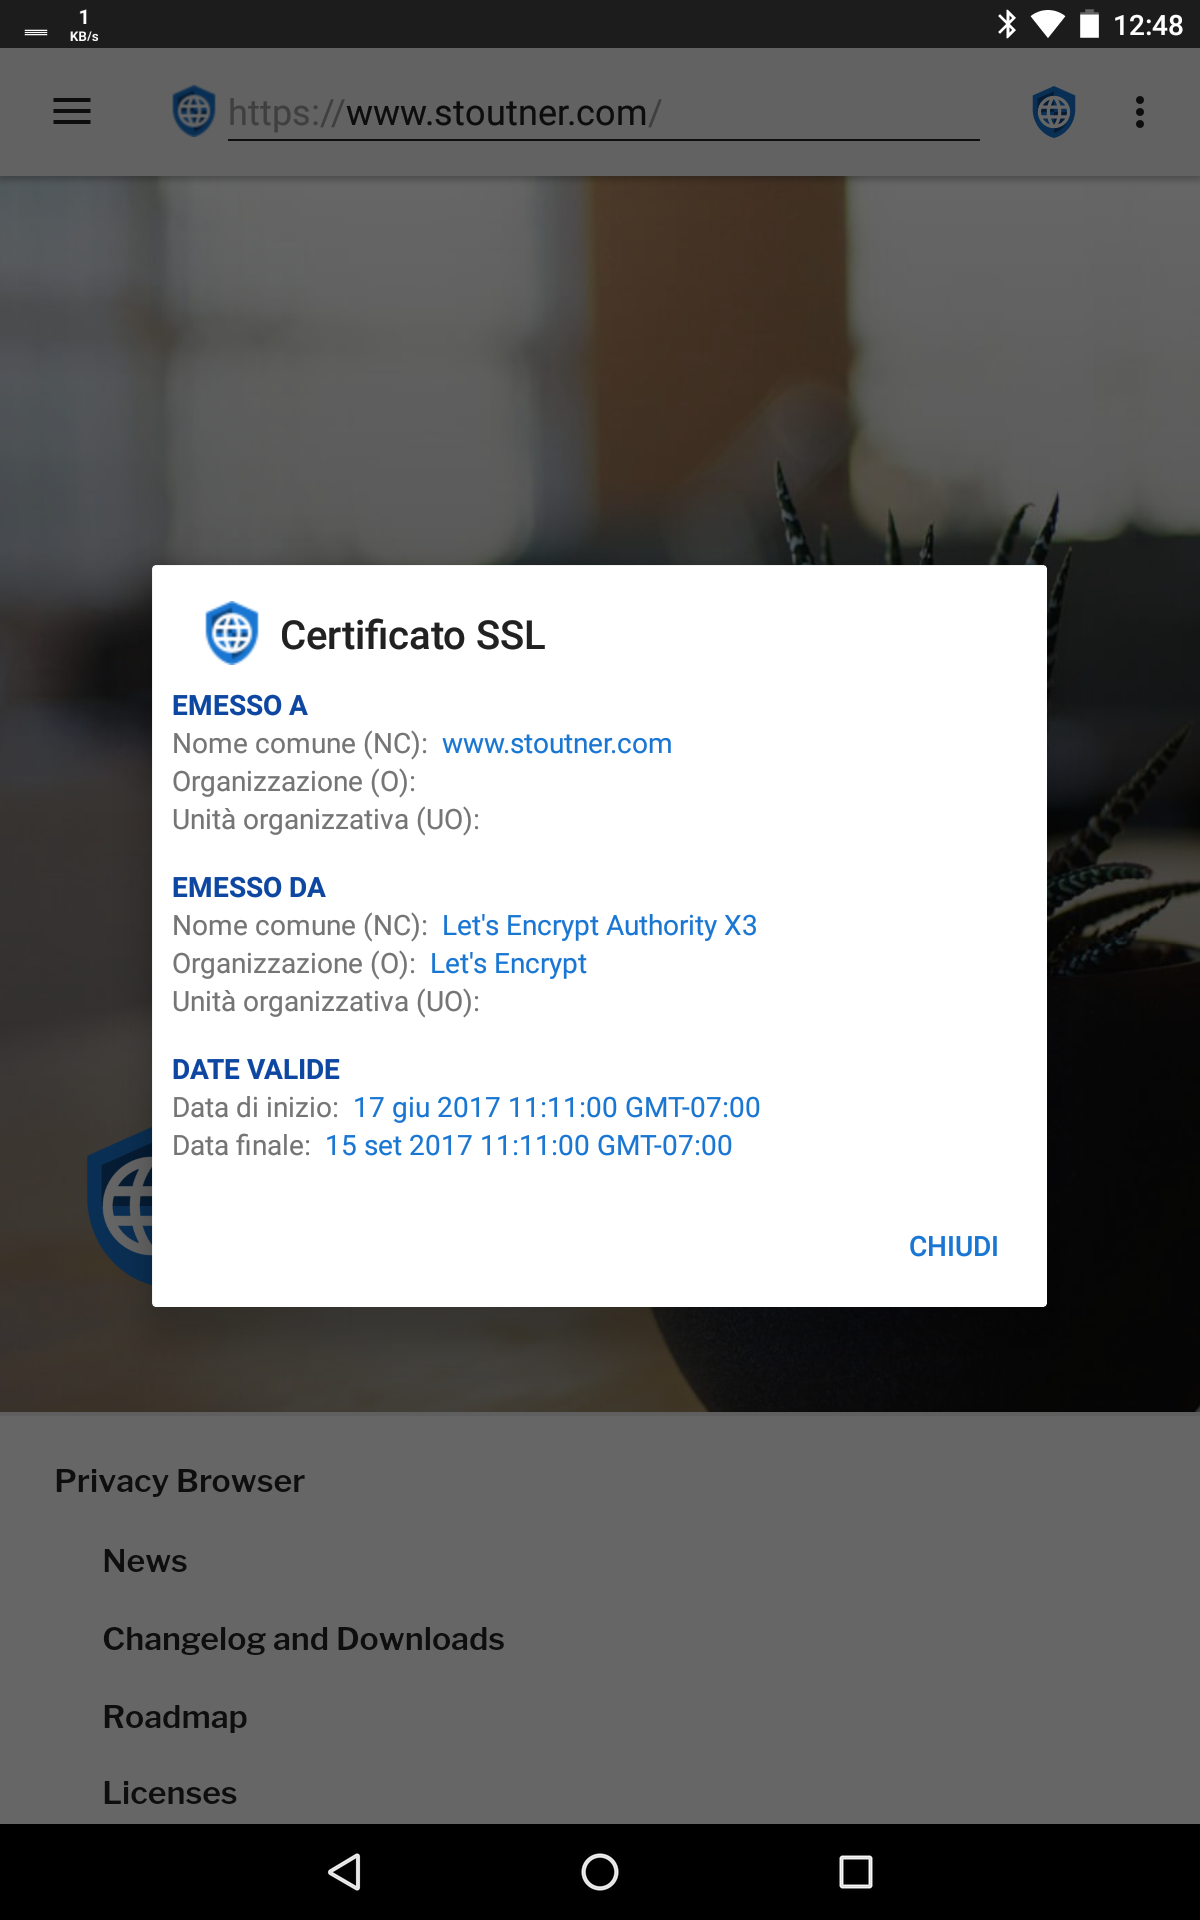 fastlane/metadata/android/it/sevenInchScreenshots/01 - View SSL Certificate - it.png